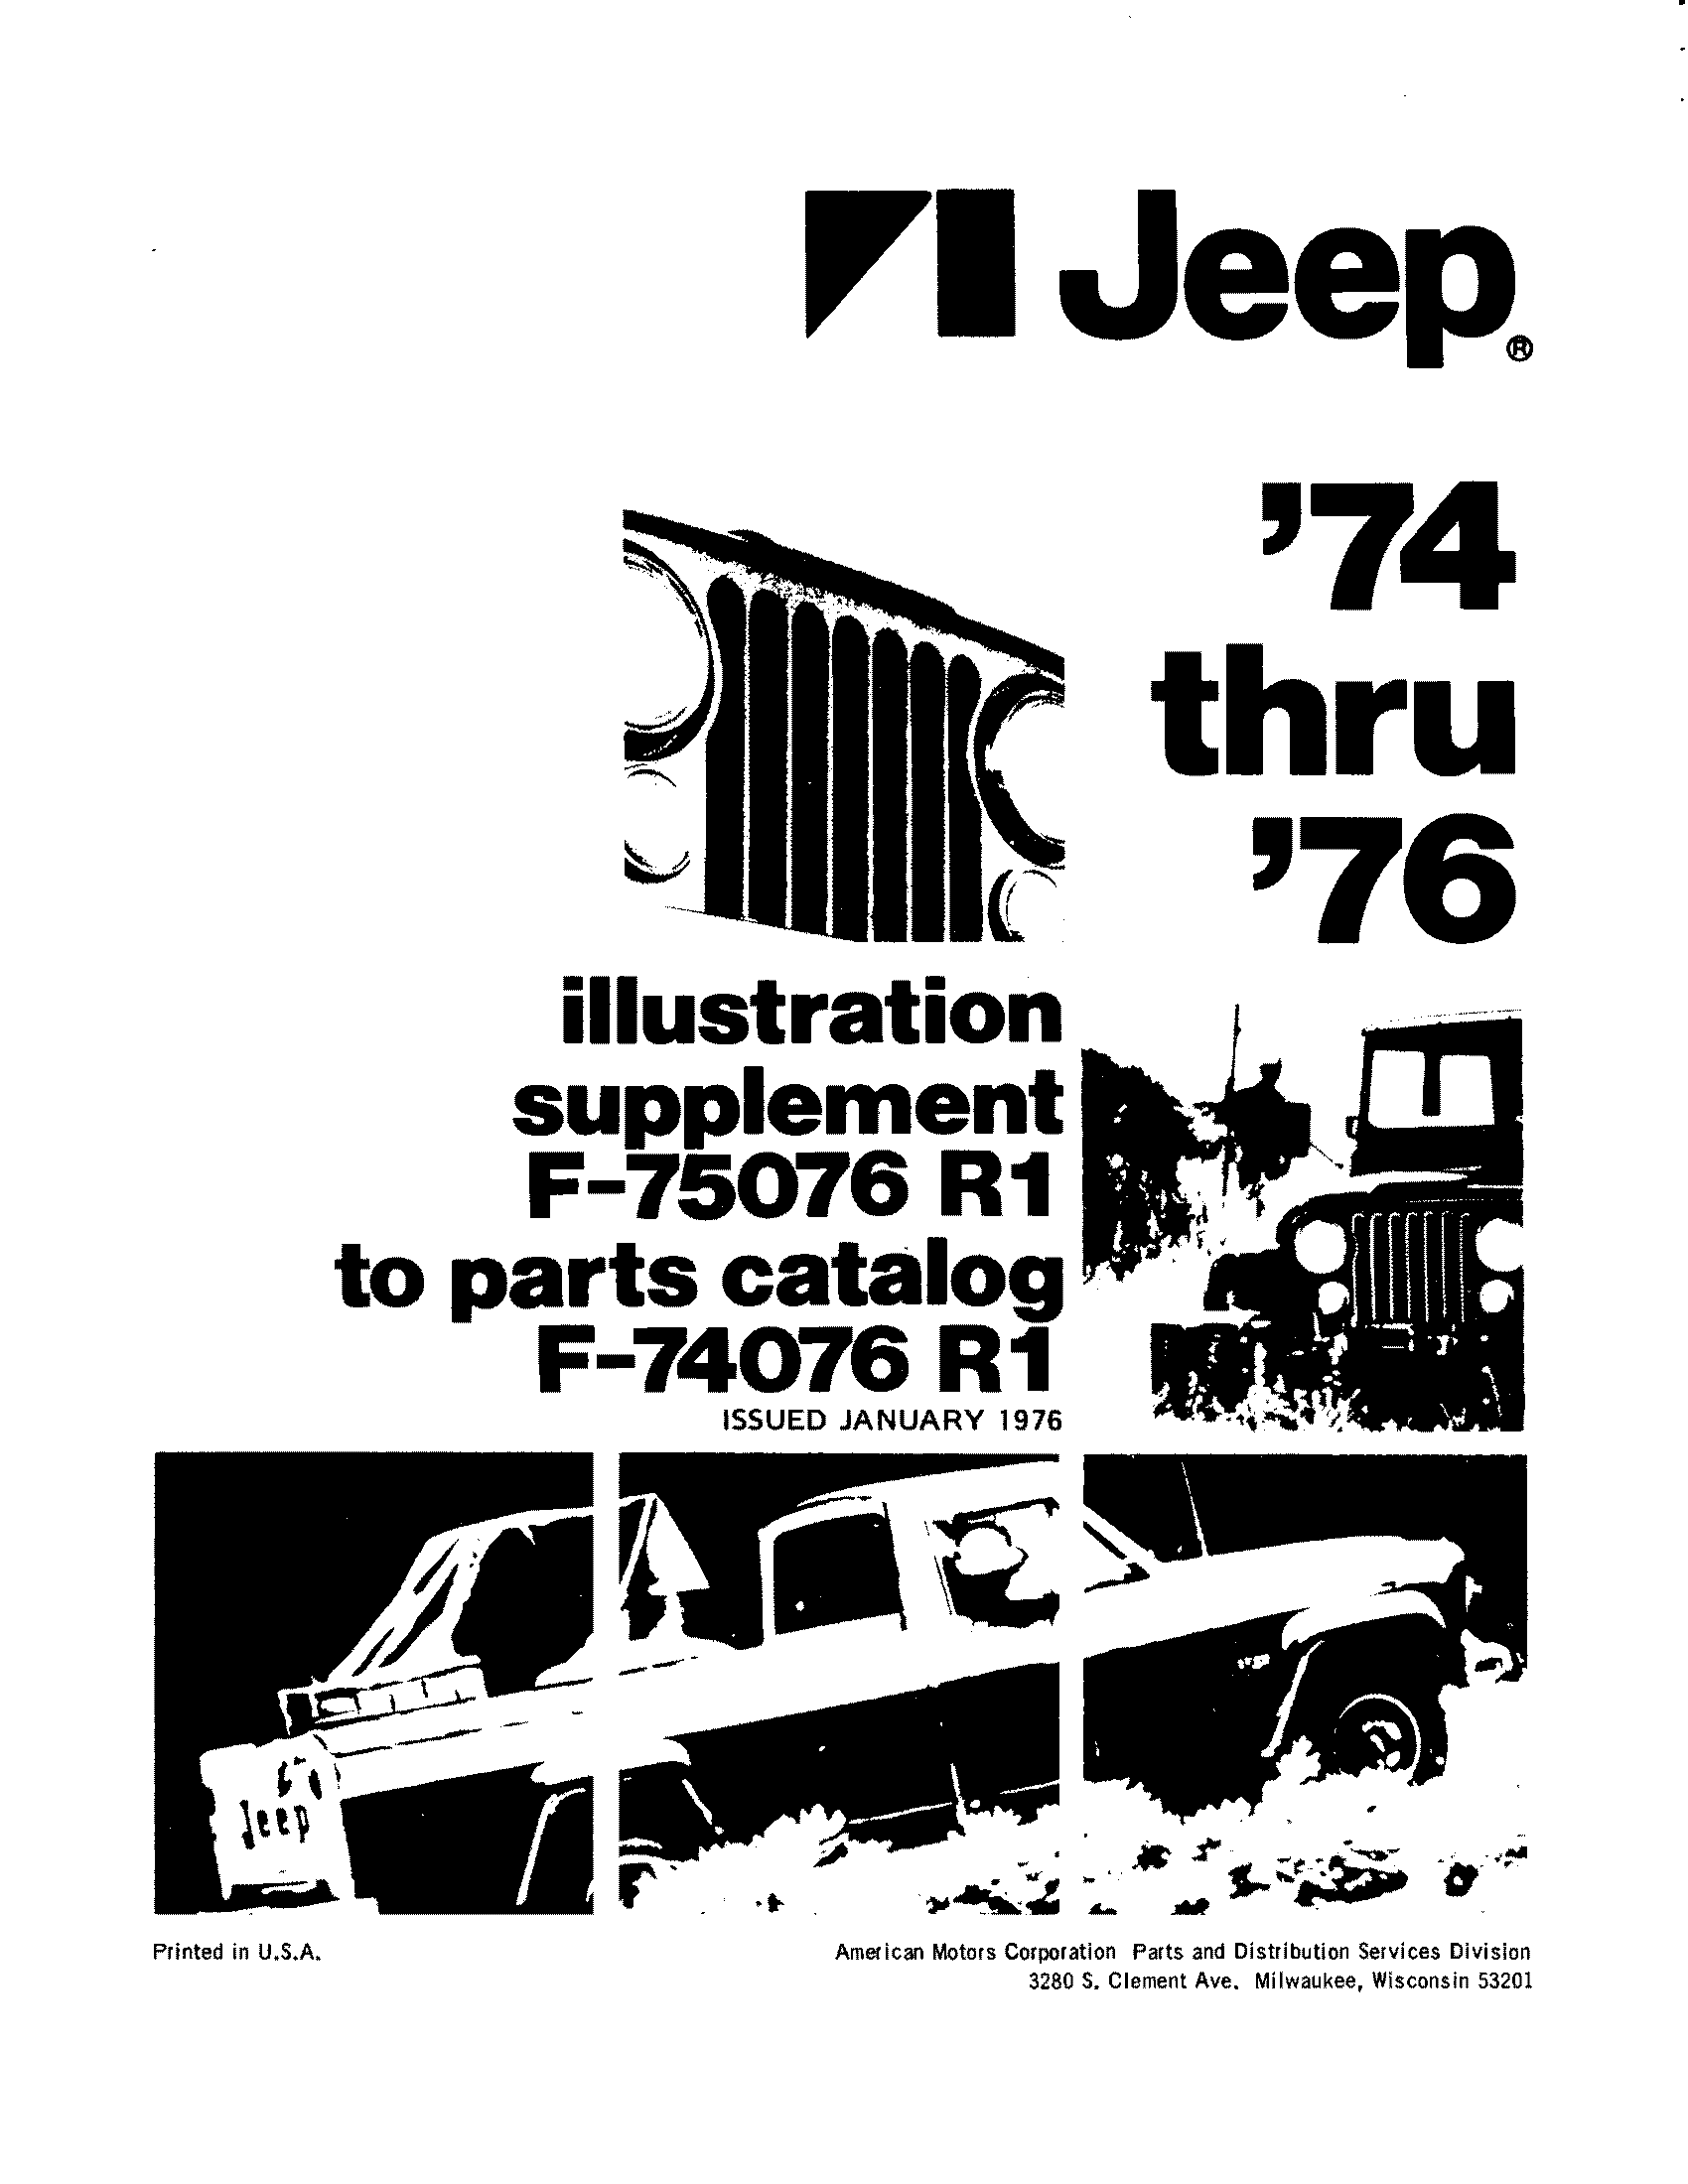 Illustration Supplement F-75076 R1 January 1976